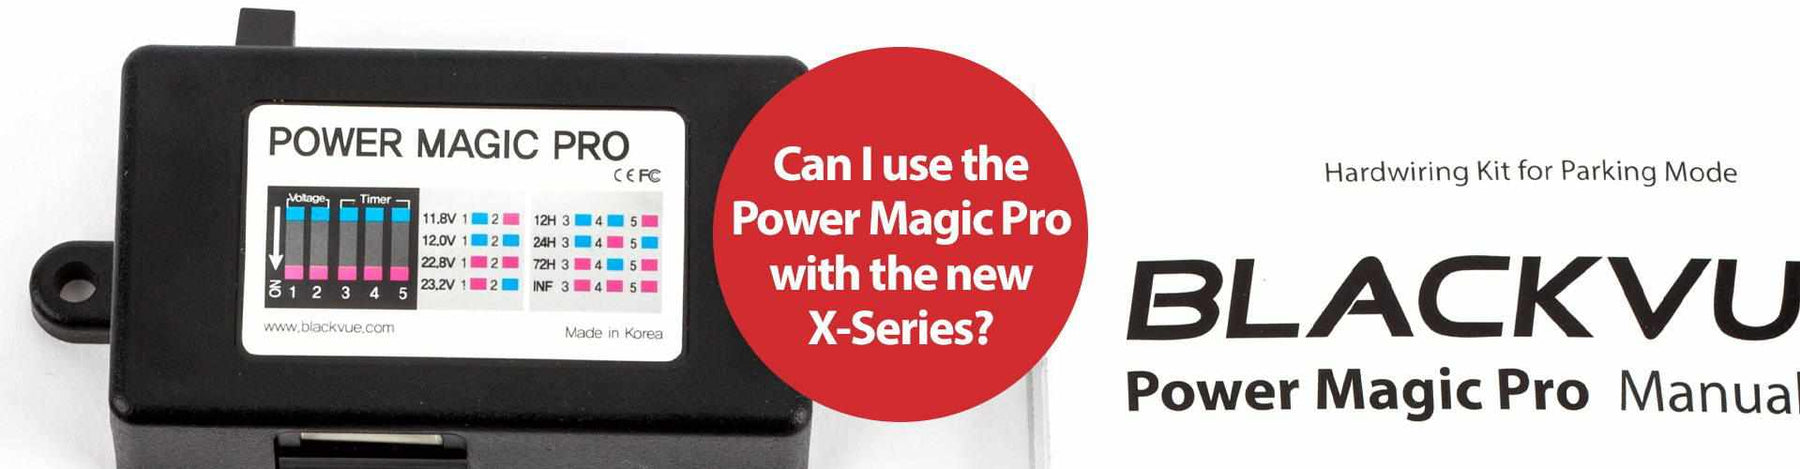 Blackvue X-Series: battery pack, hardwiring kit or PMP? -  - BlackboxMyCar Canada